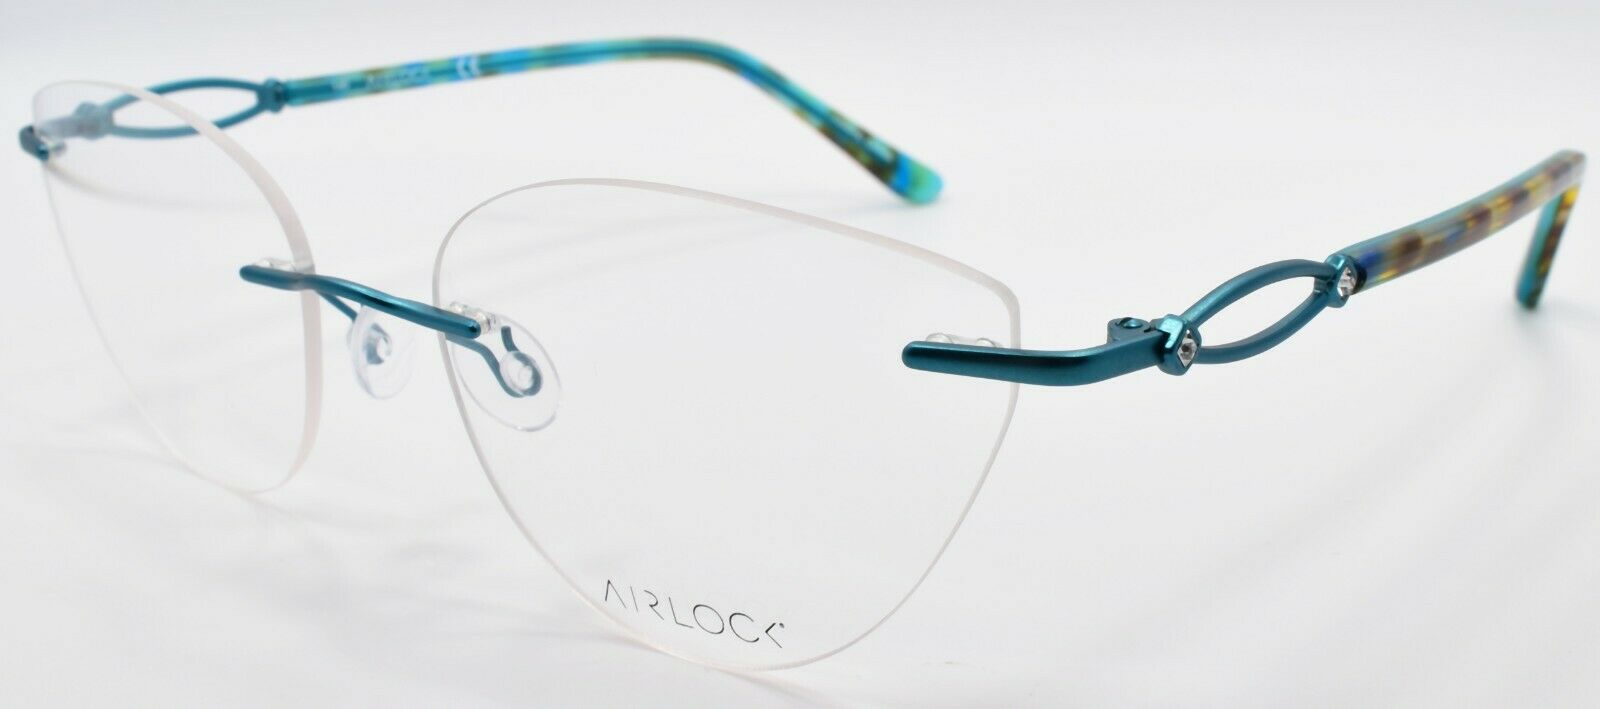 1-Airlock Luminous 204 320 Women's Eyeglasses Frames Rimless 53-18-140 Teal-886895305402-IKSpecs